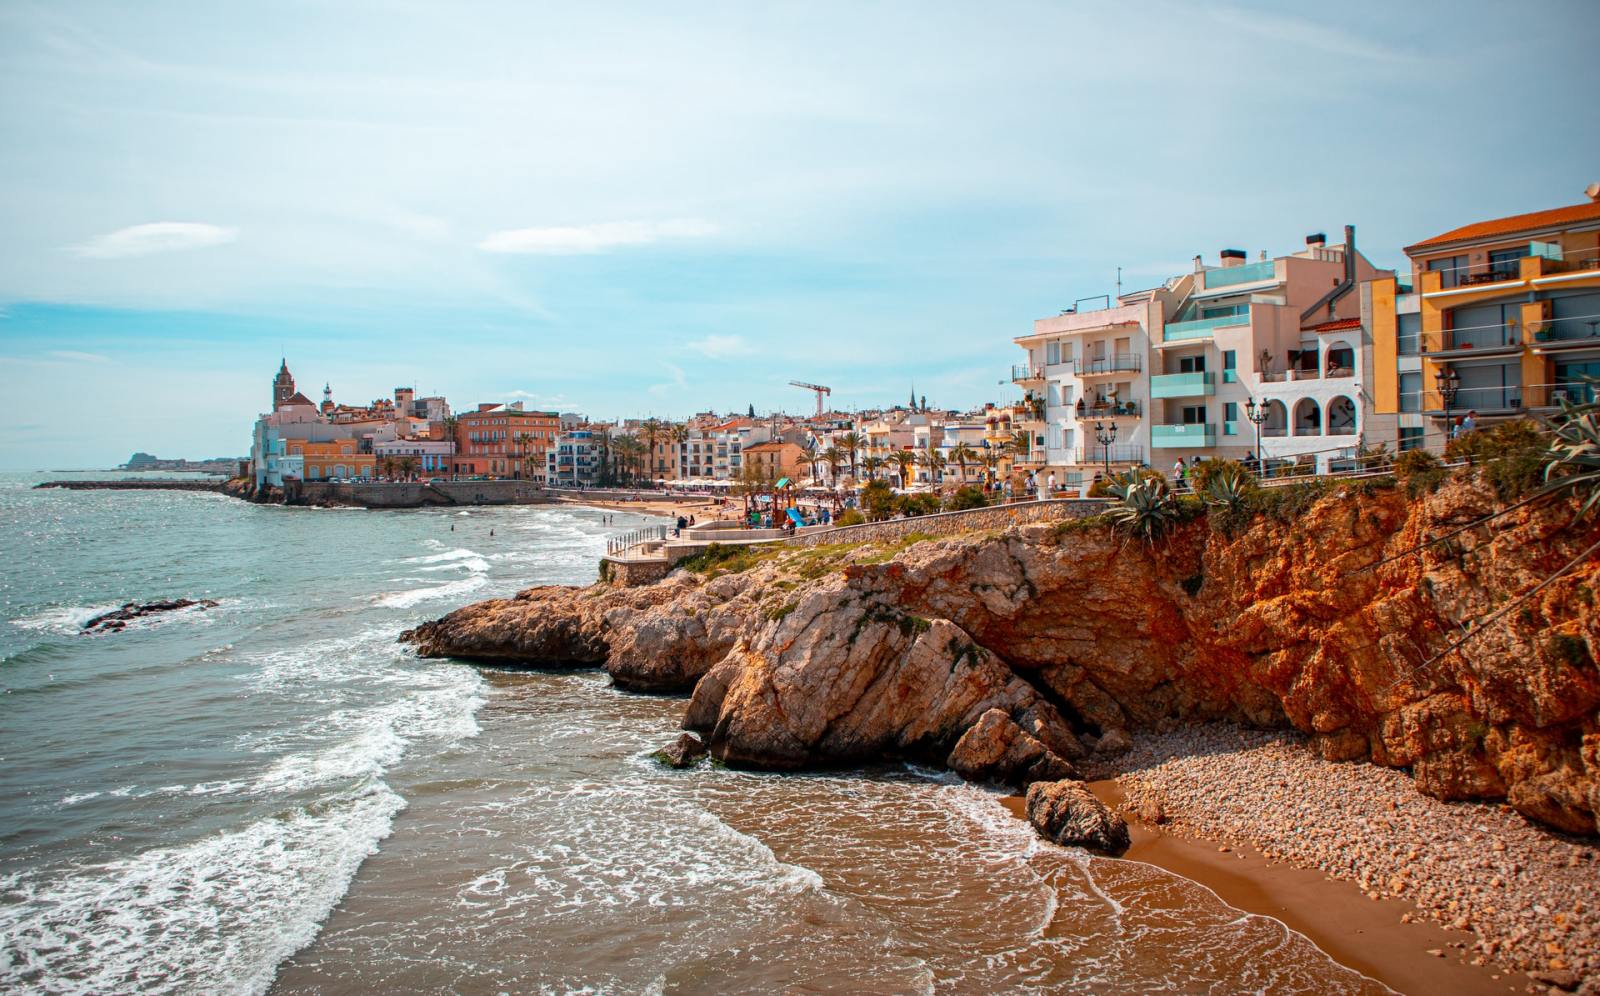 Hoteles para disfrutar de la costa catalana cerca de Barcelona, en Sitges